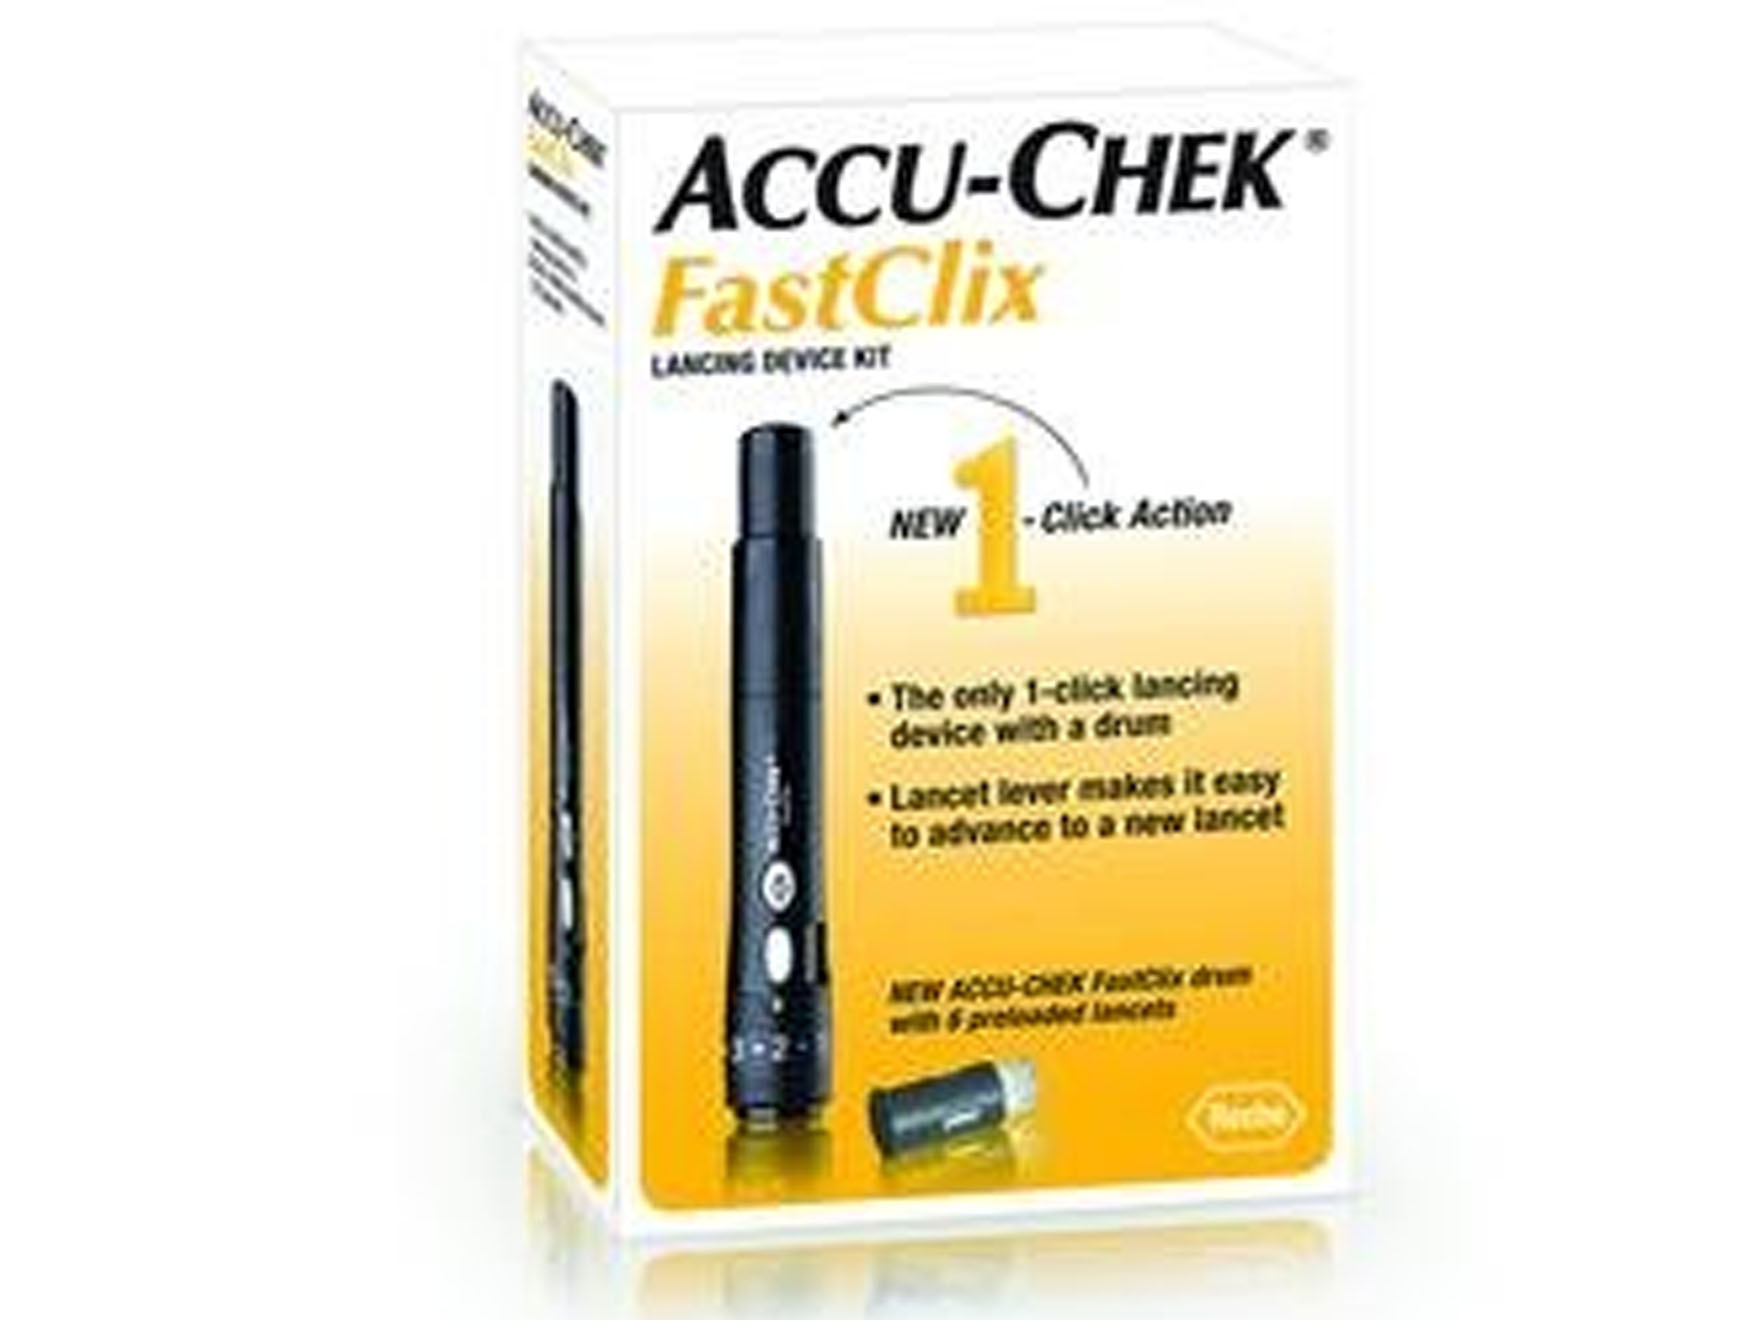 Accu-chek Fastclix - autopiqueur -1 pc